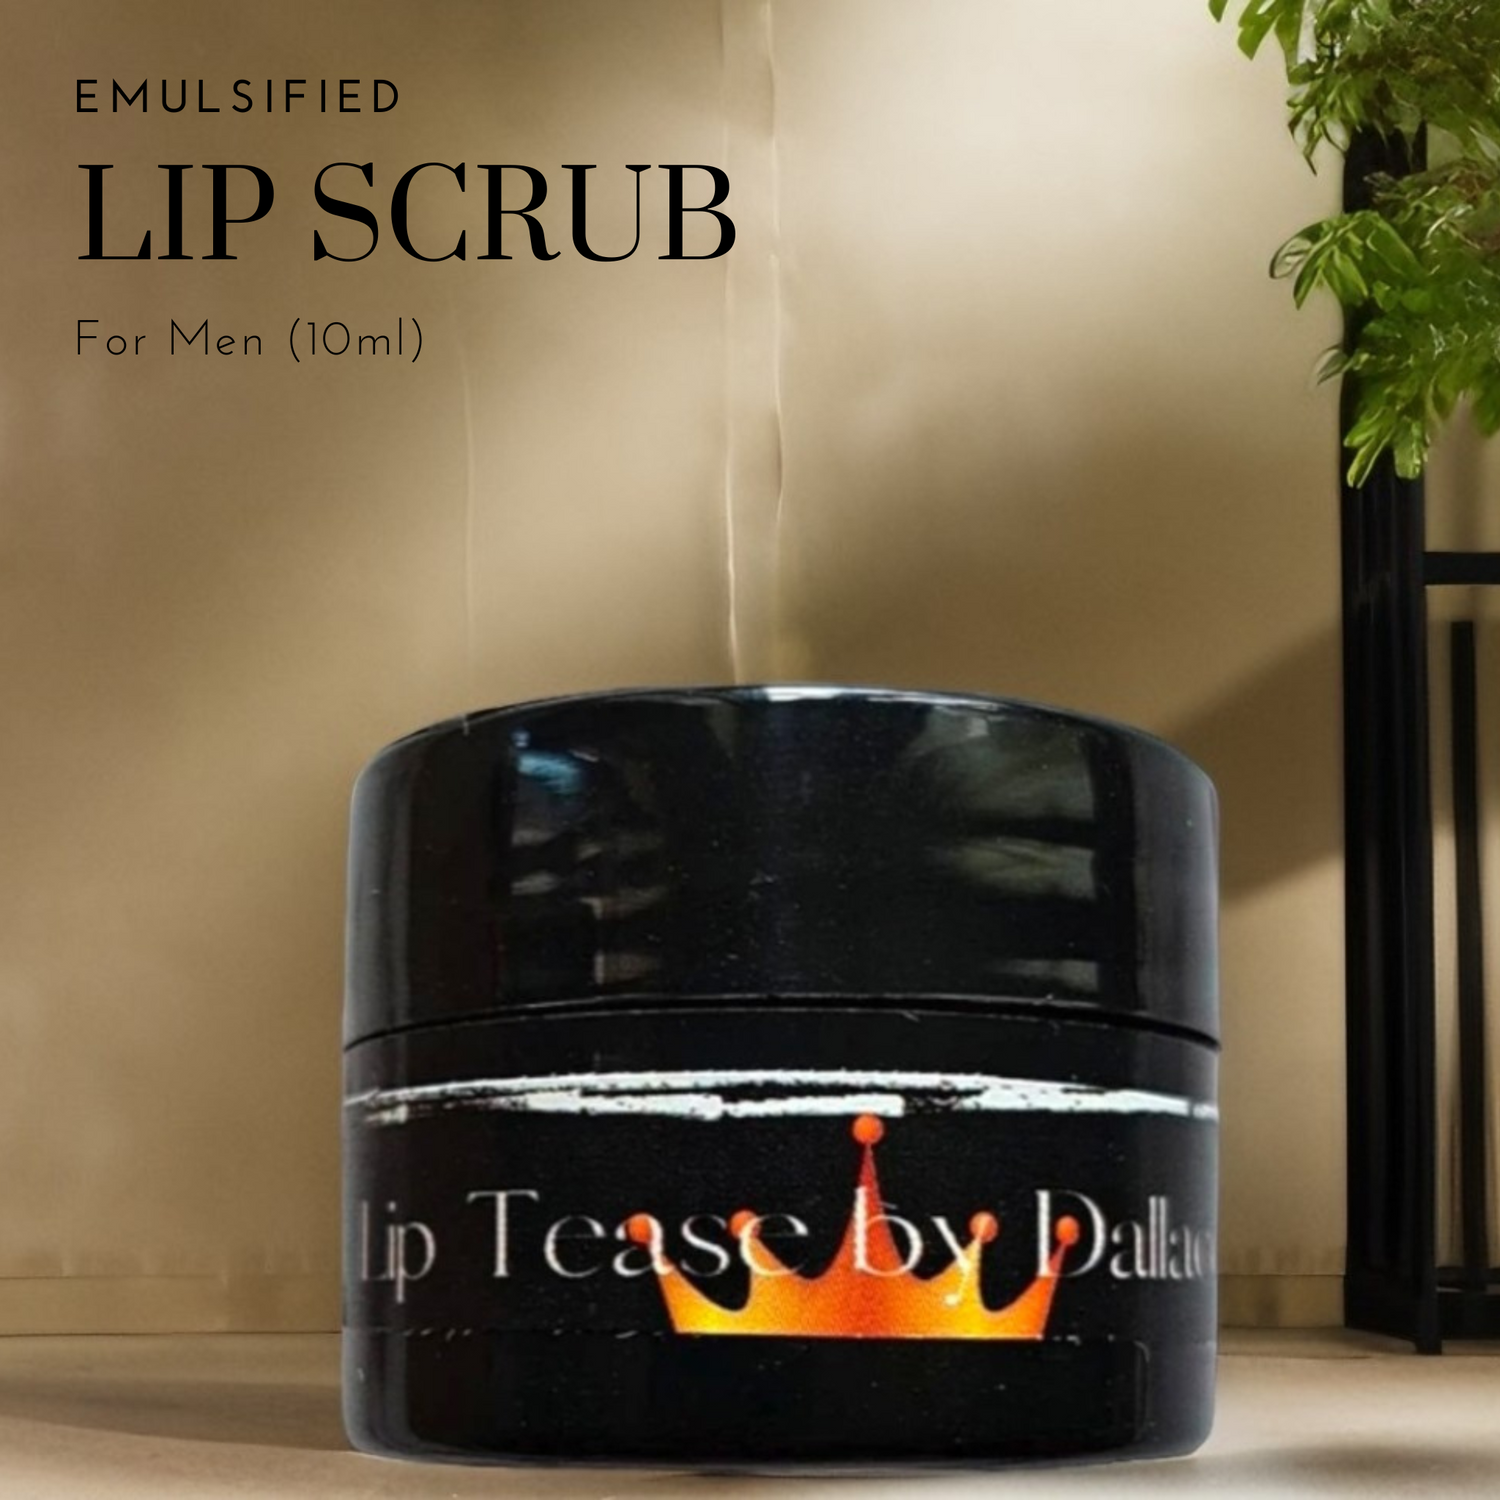 Emulsified Lip Scrub (Mens) Lip Scrub Lip Tease by Dallace Small 10 ml  